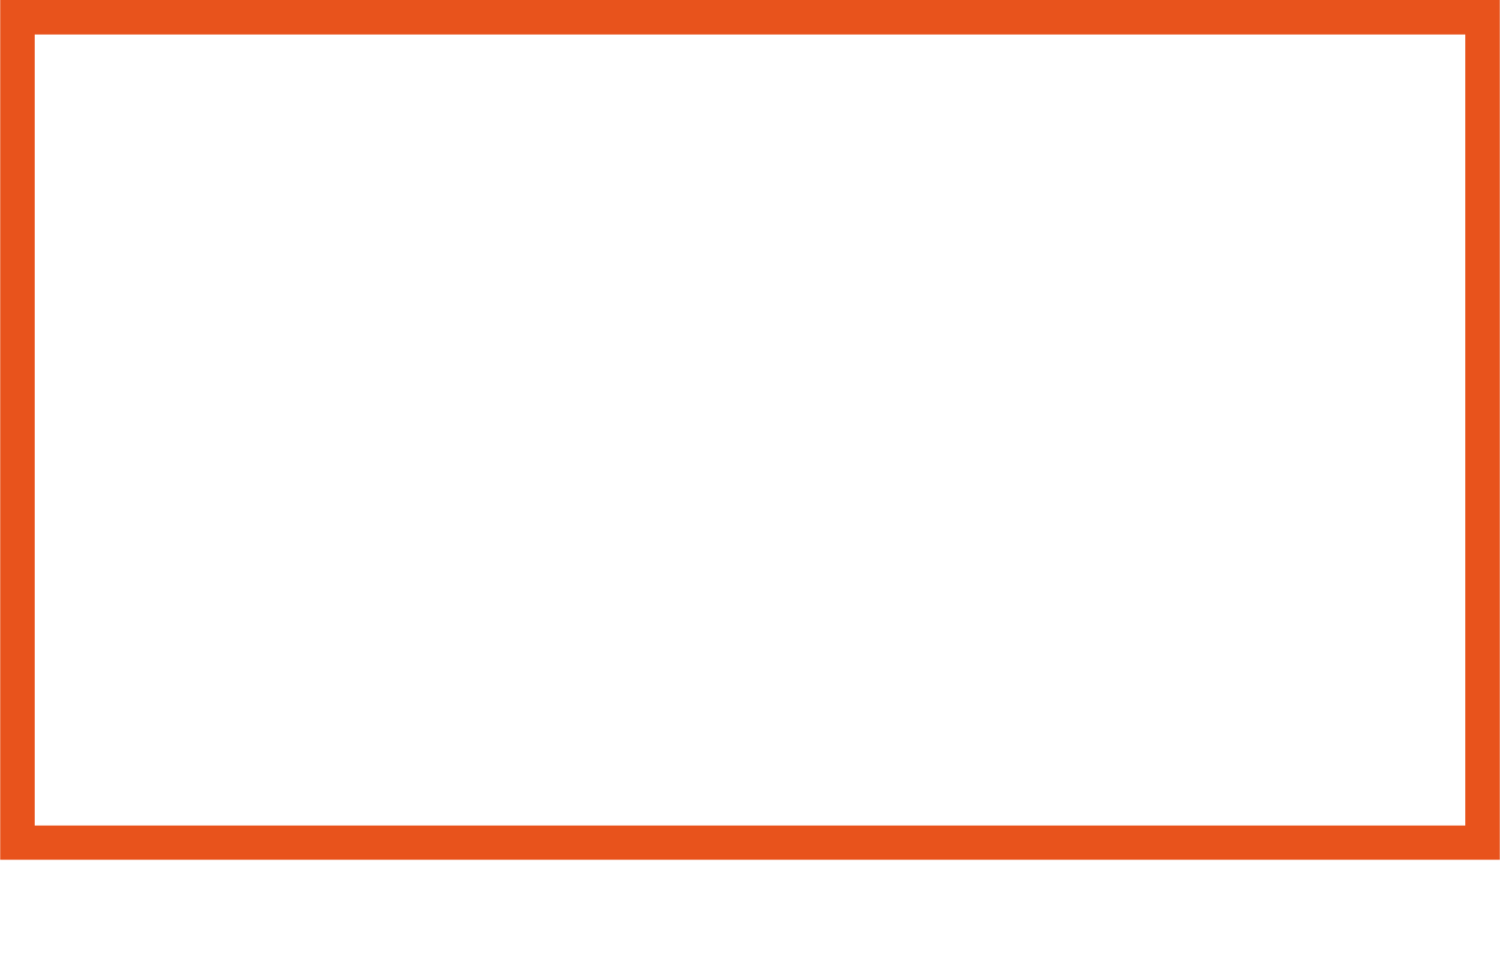 Greenbrook Media 